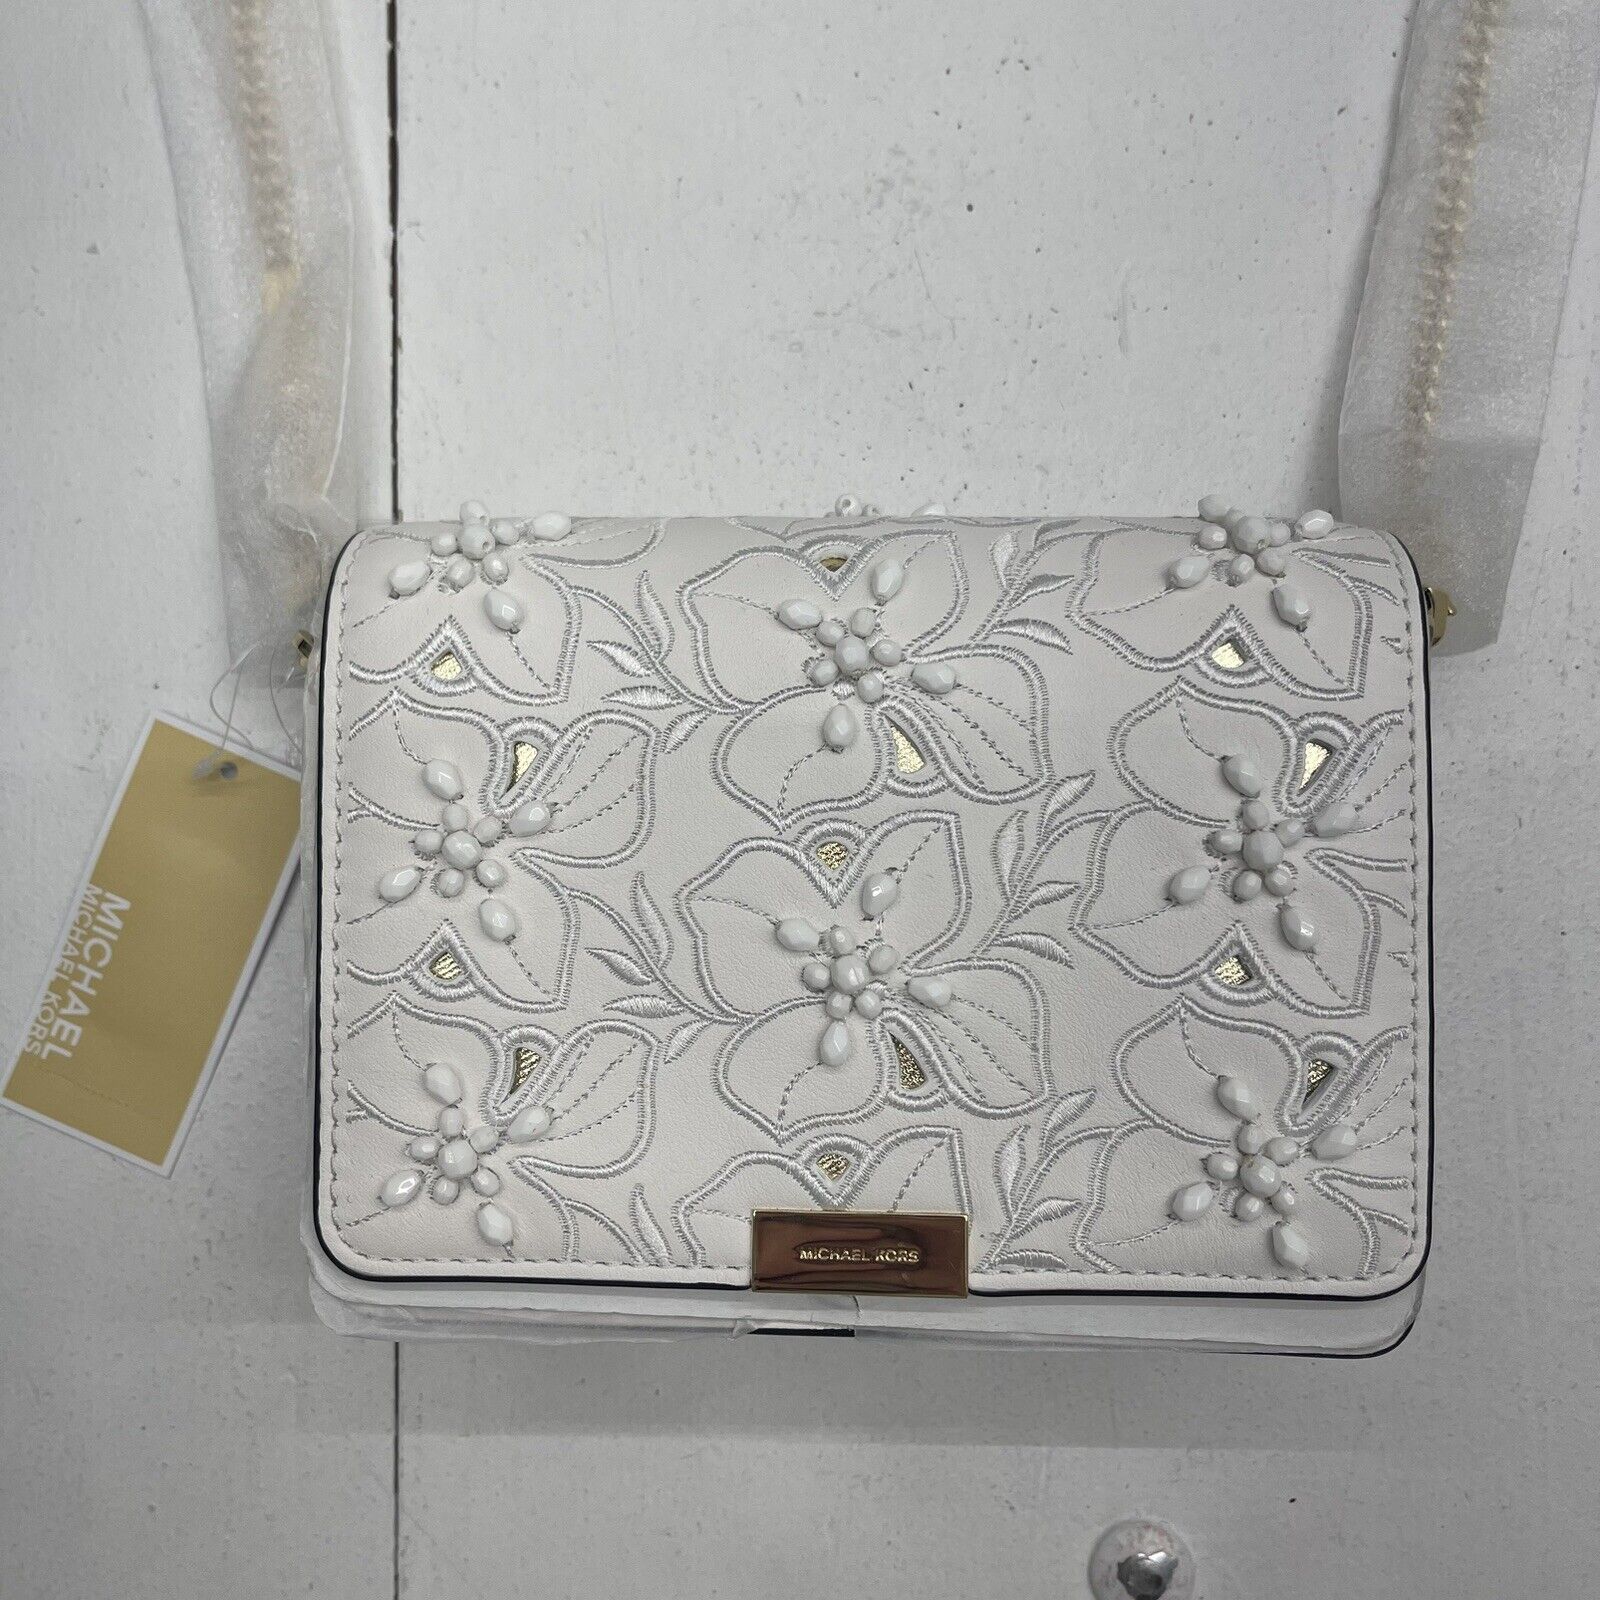 Michael Kors Jade Gusset Medium Clutch Crossbody White Embroidered